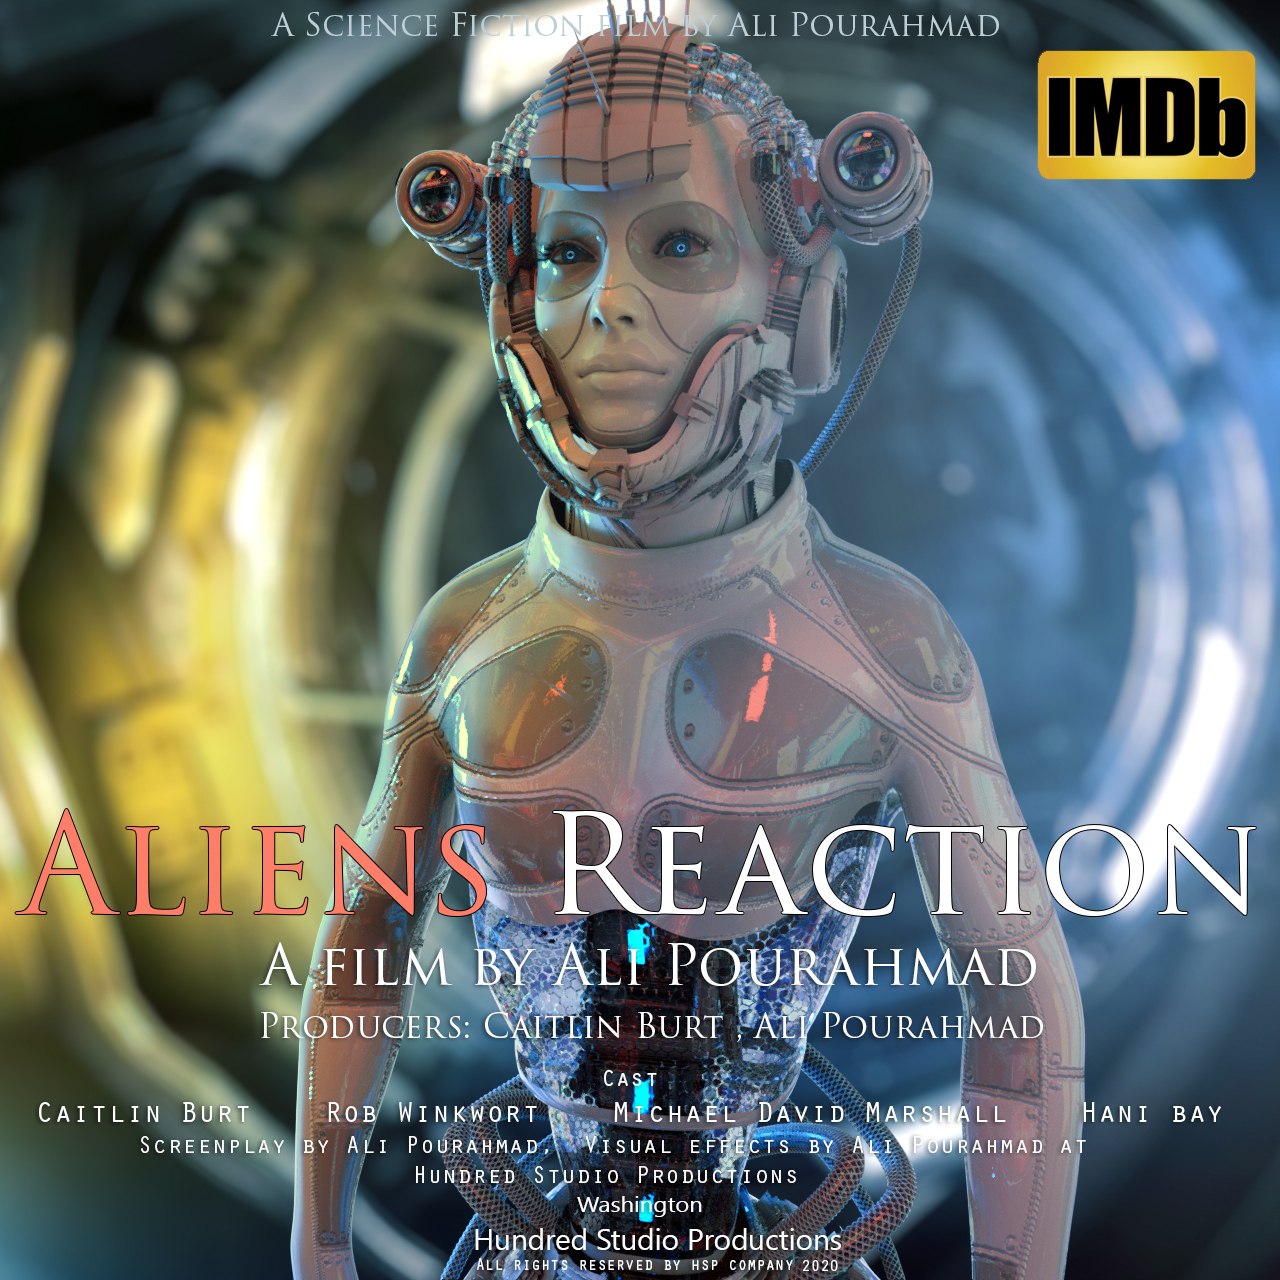 Ali Pourahmad - Sci fi film directors - Caitlin Burt -Sci fi movies -Hollywood vfx - Iran vfx- best sci fi movie - new sci fi films - science fiction movie directors